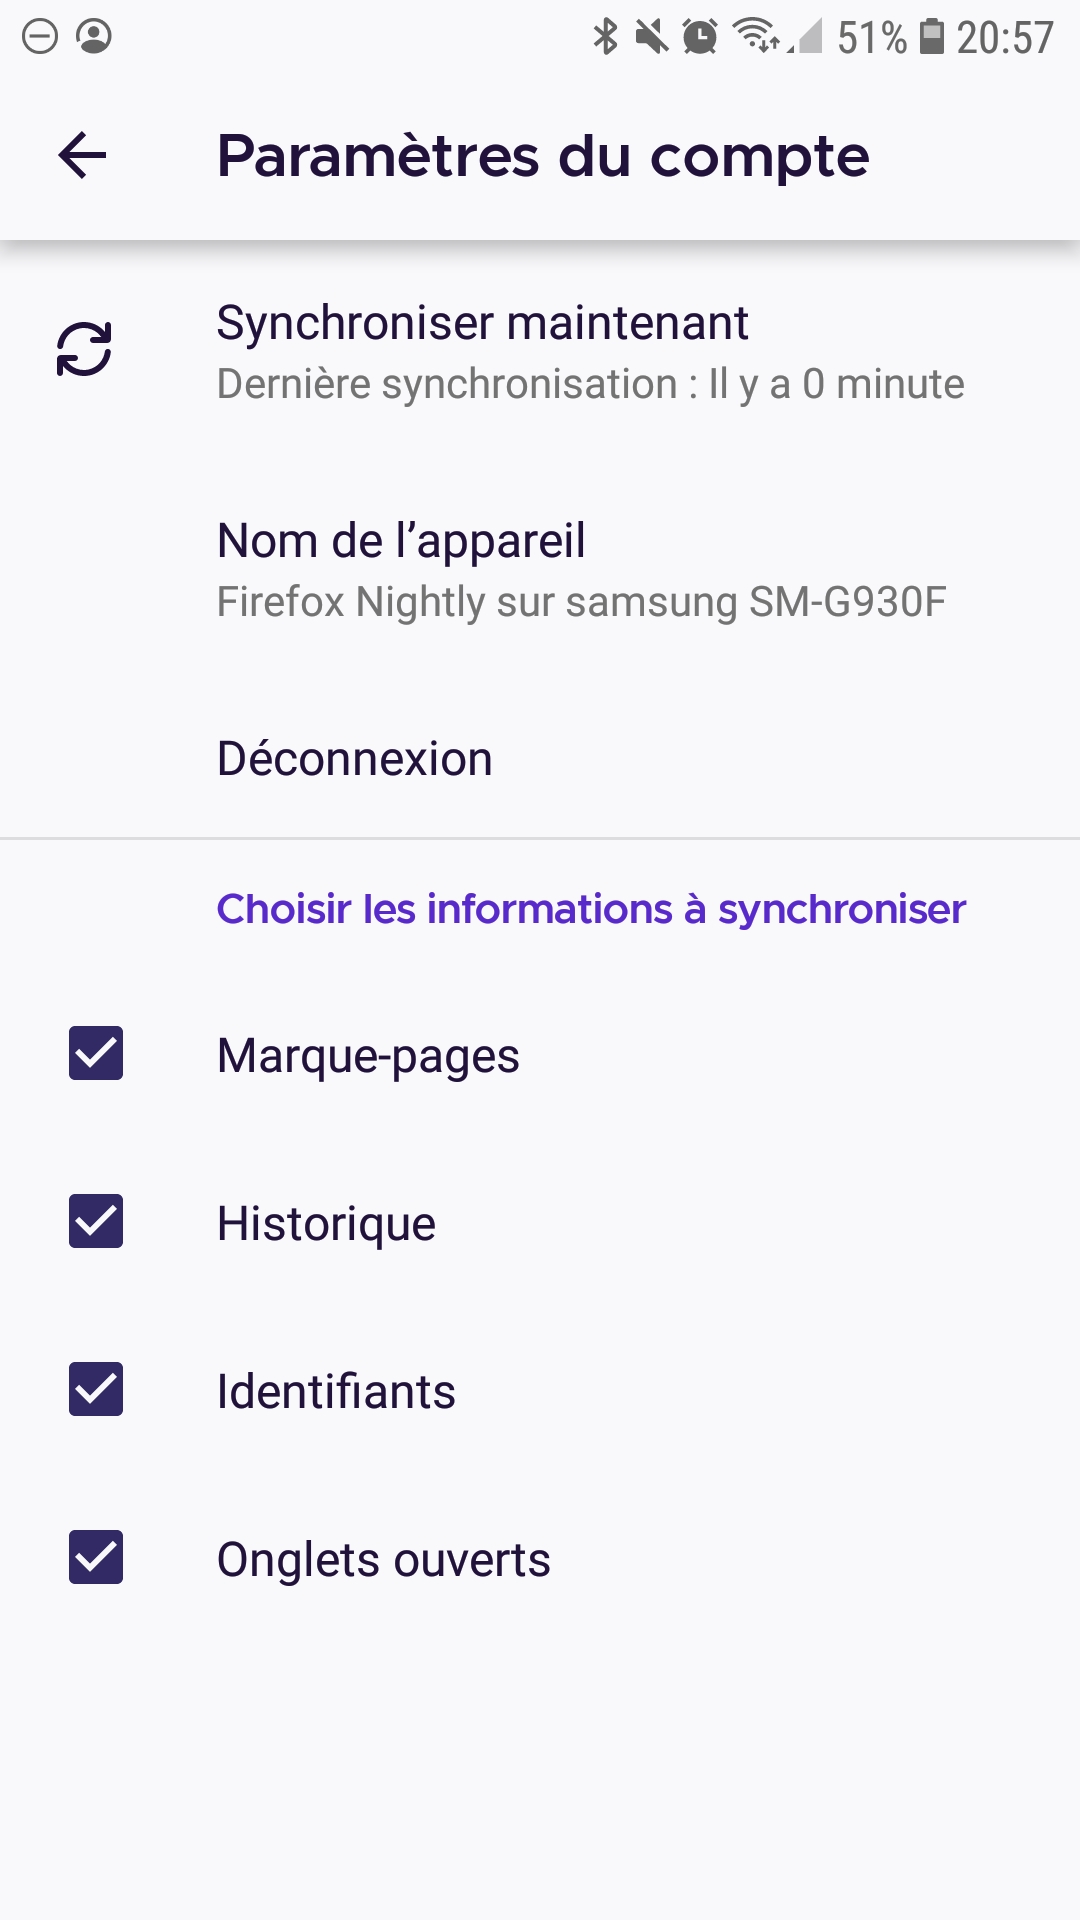 Paramètres de Sync dans Firefox pour Android Nightly